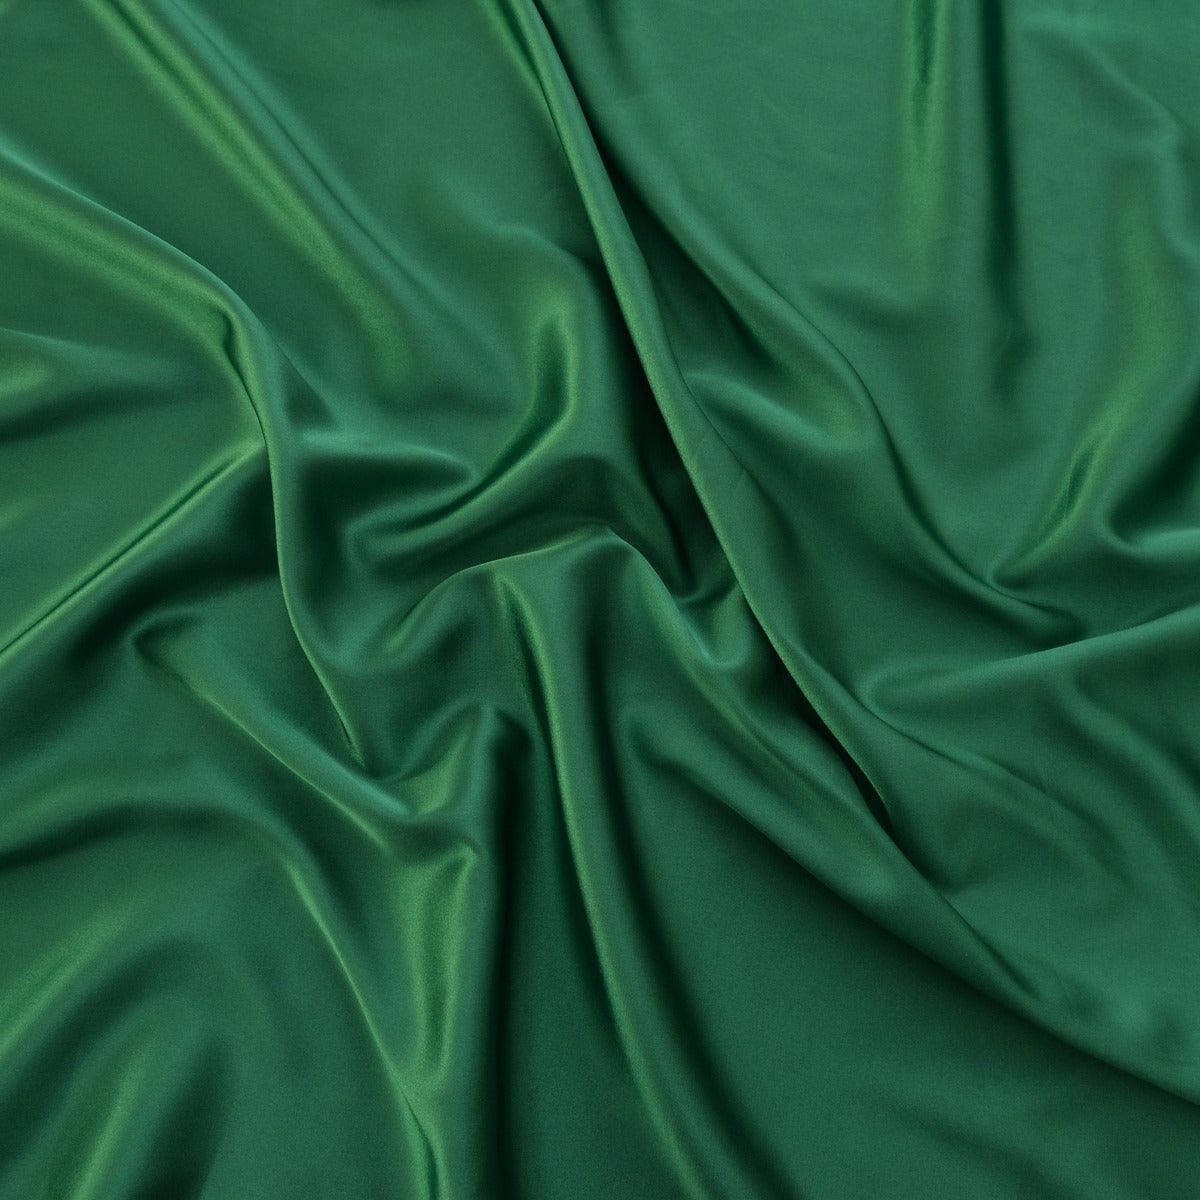 Satin Elastic - Verde